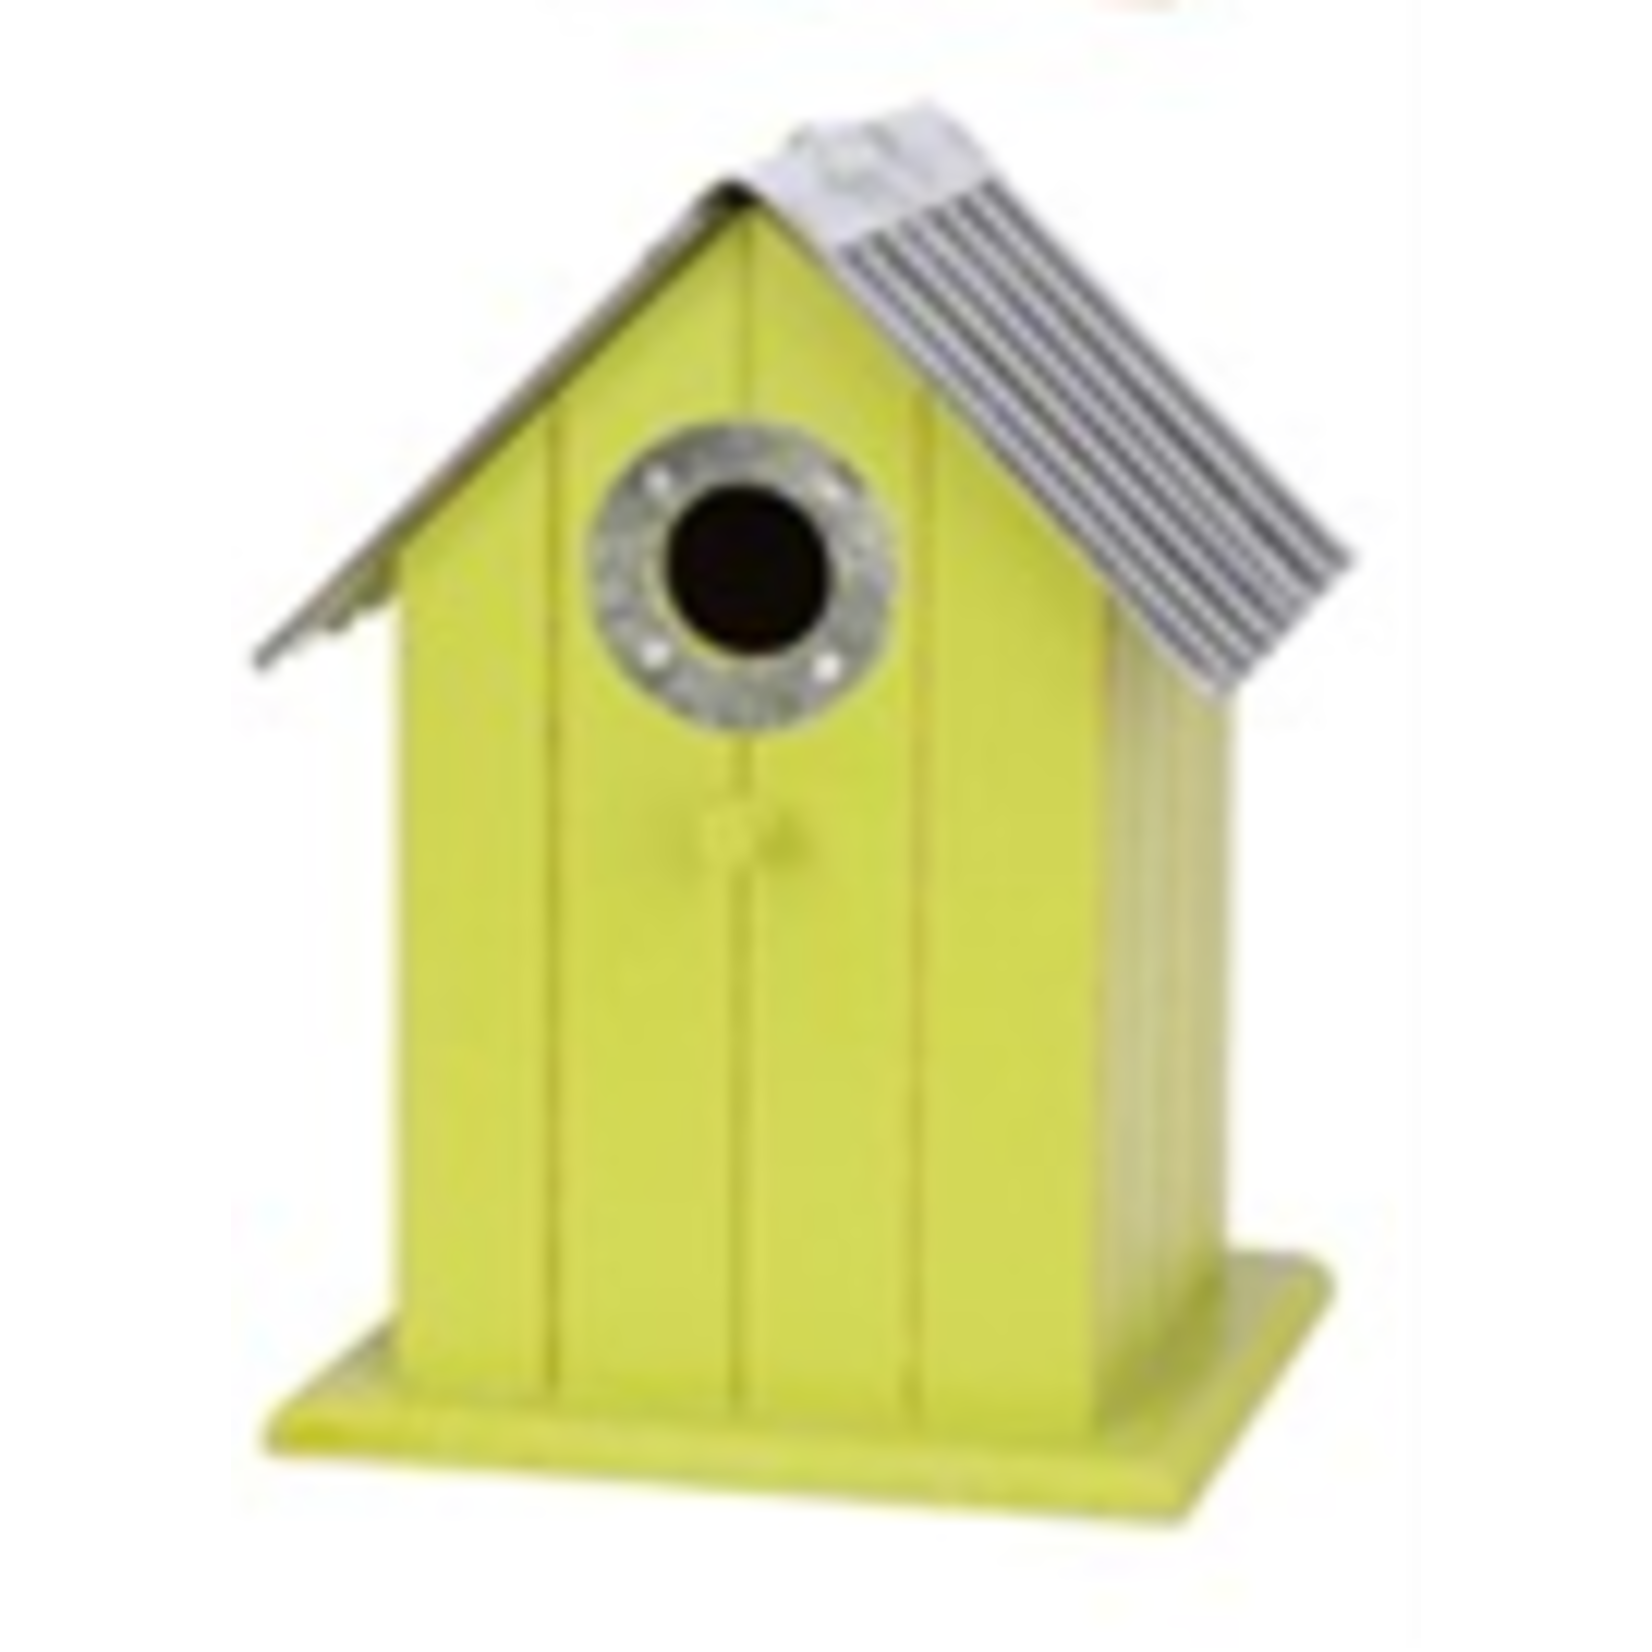 Corrugated Metal Colorful Wren Chickadee Bird House